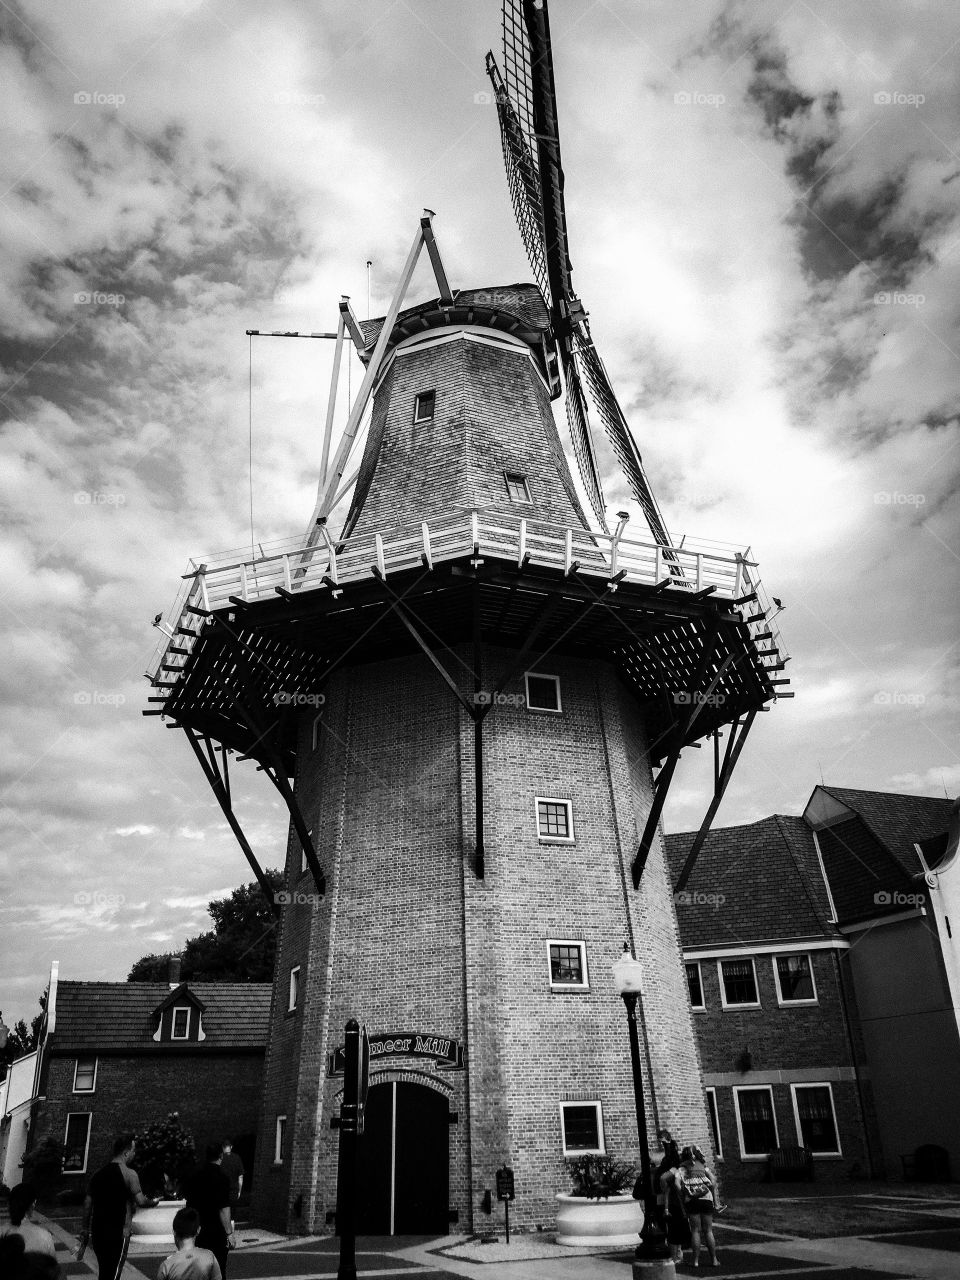 The Vermeer Windmill in Pella, IA.